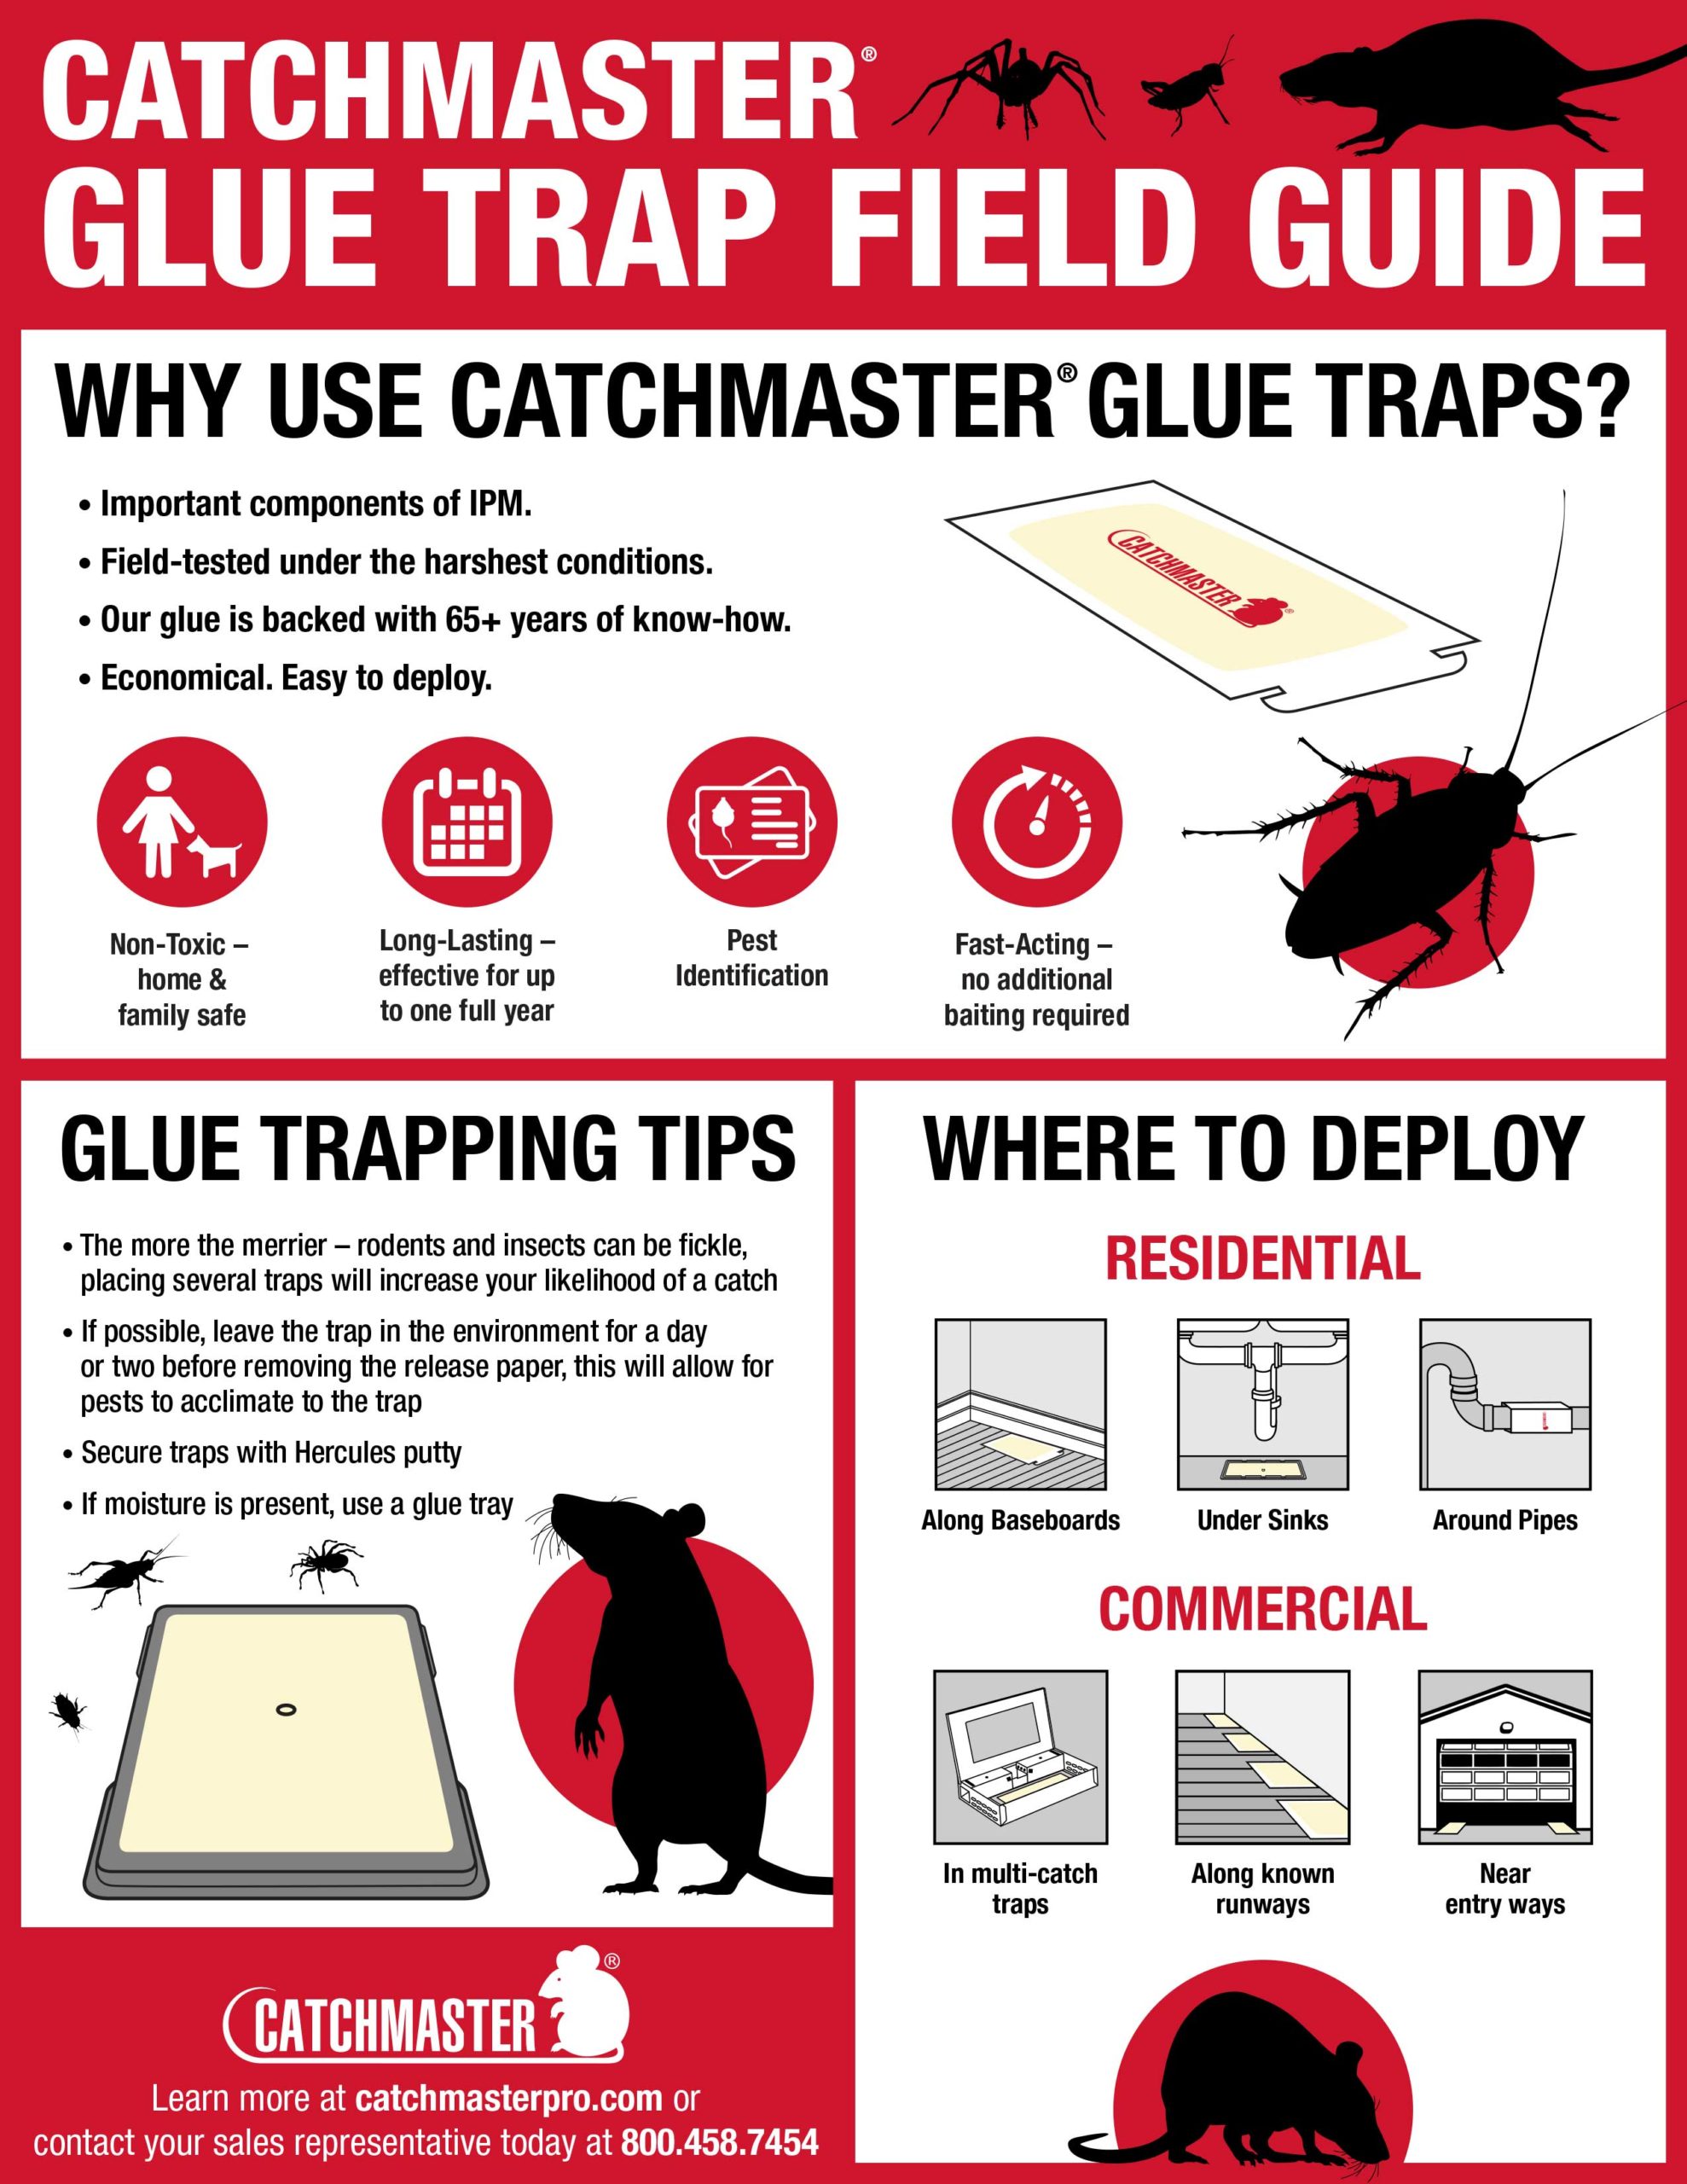 https://pestcontrolsupplies.com/wp-content/uploads/2013/02/Pro-Glue-Trap-Field-Guide-scaled-1.jpg